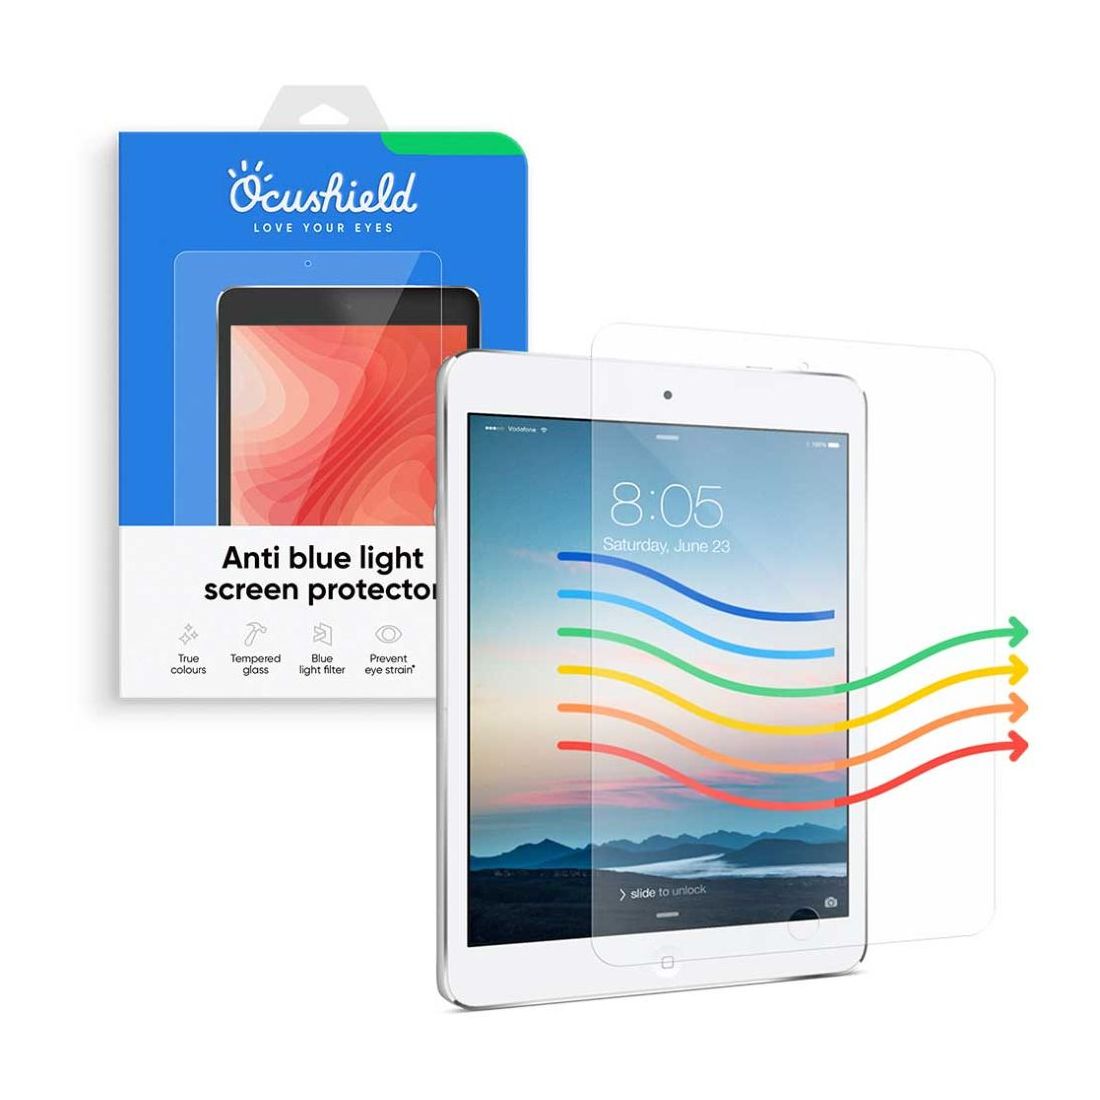 Ocushield Anti Blue Light Screen Protector for iPad Mini 1/2/3